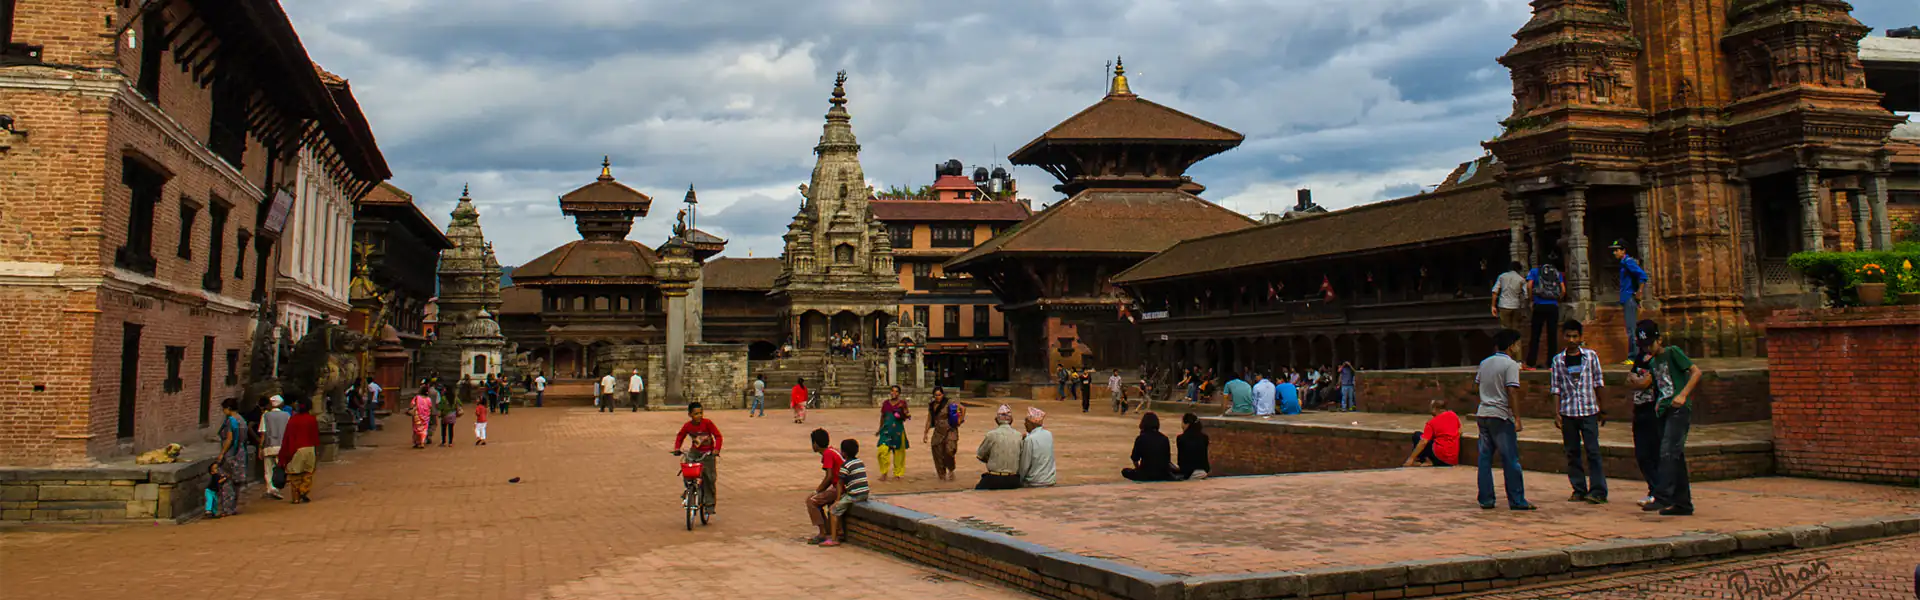 Bhaktapur Durbar Square: Don’t miss to visit